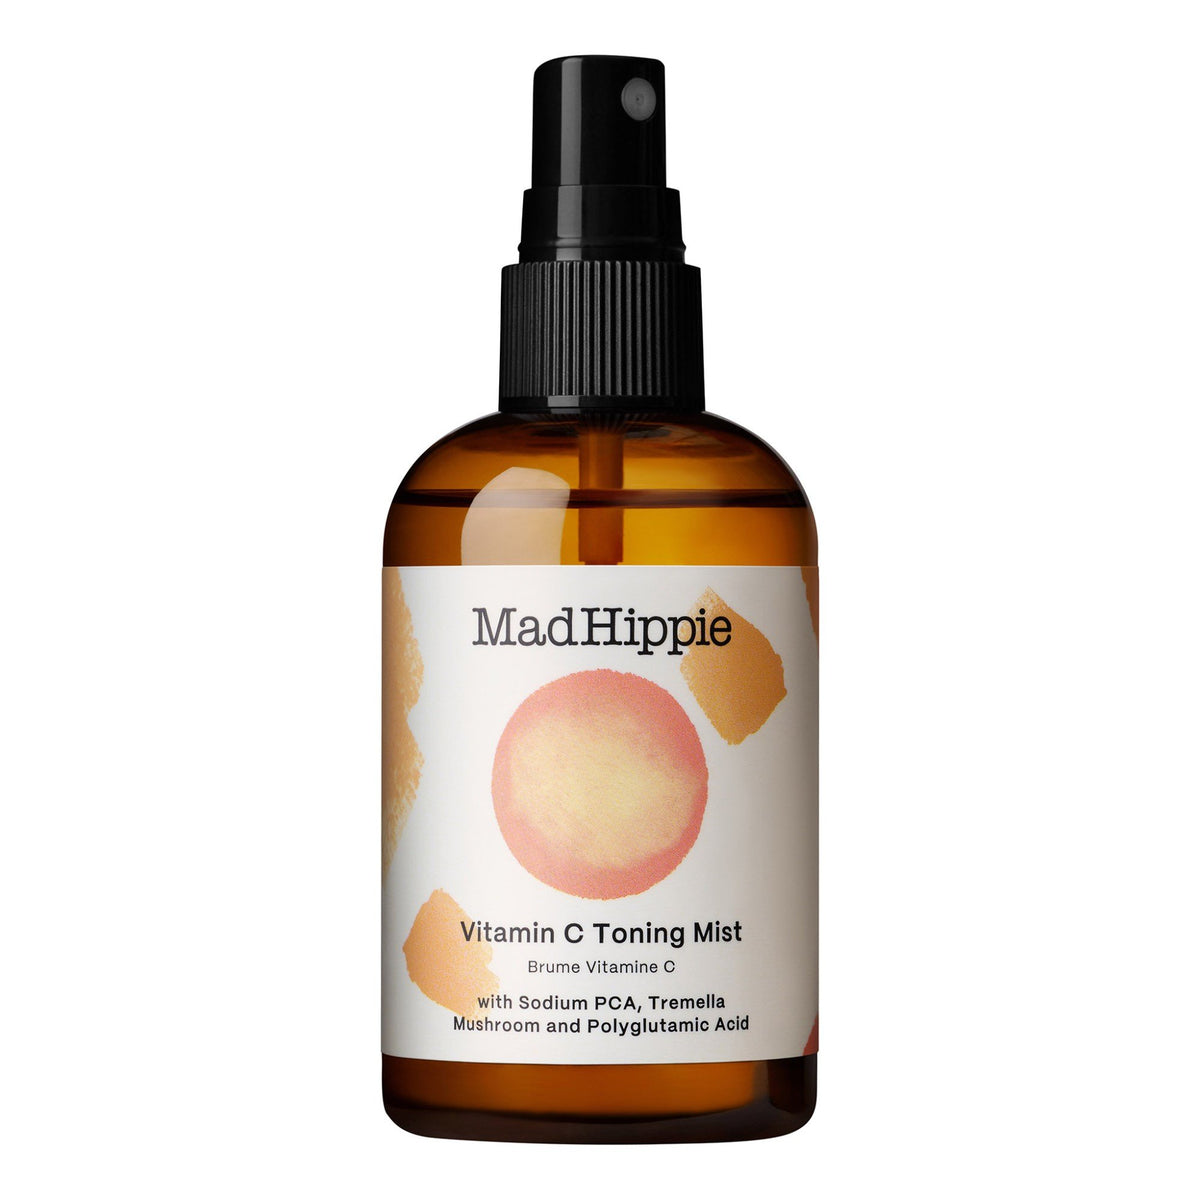 Mad Hippie Vitamin C Toning Mist 4 oz Spray